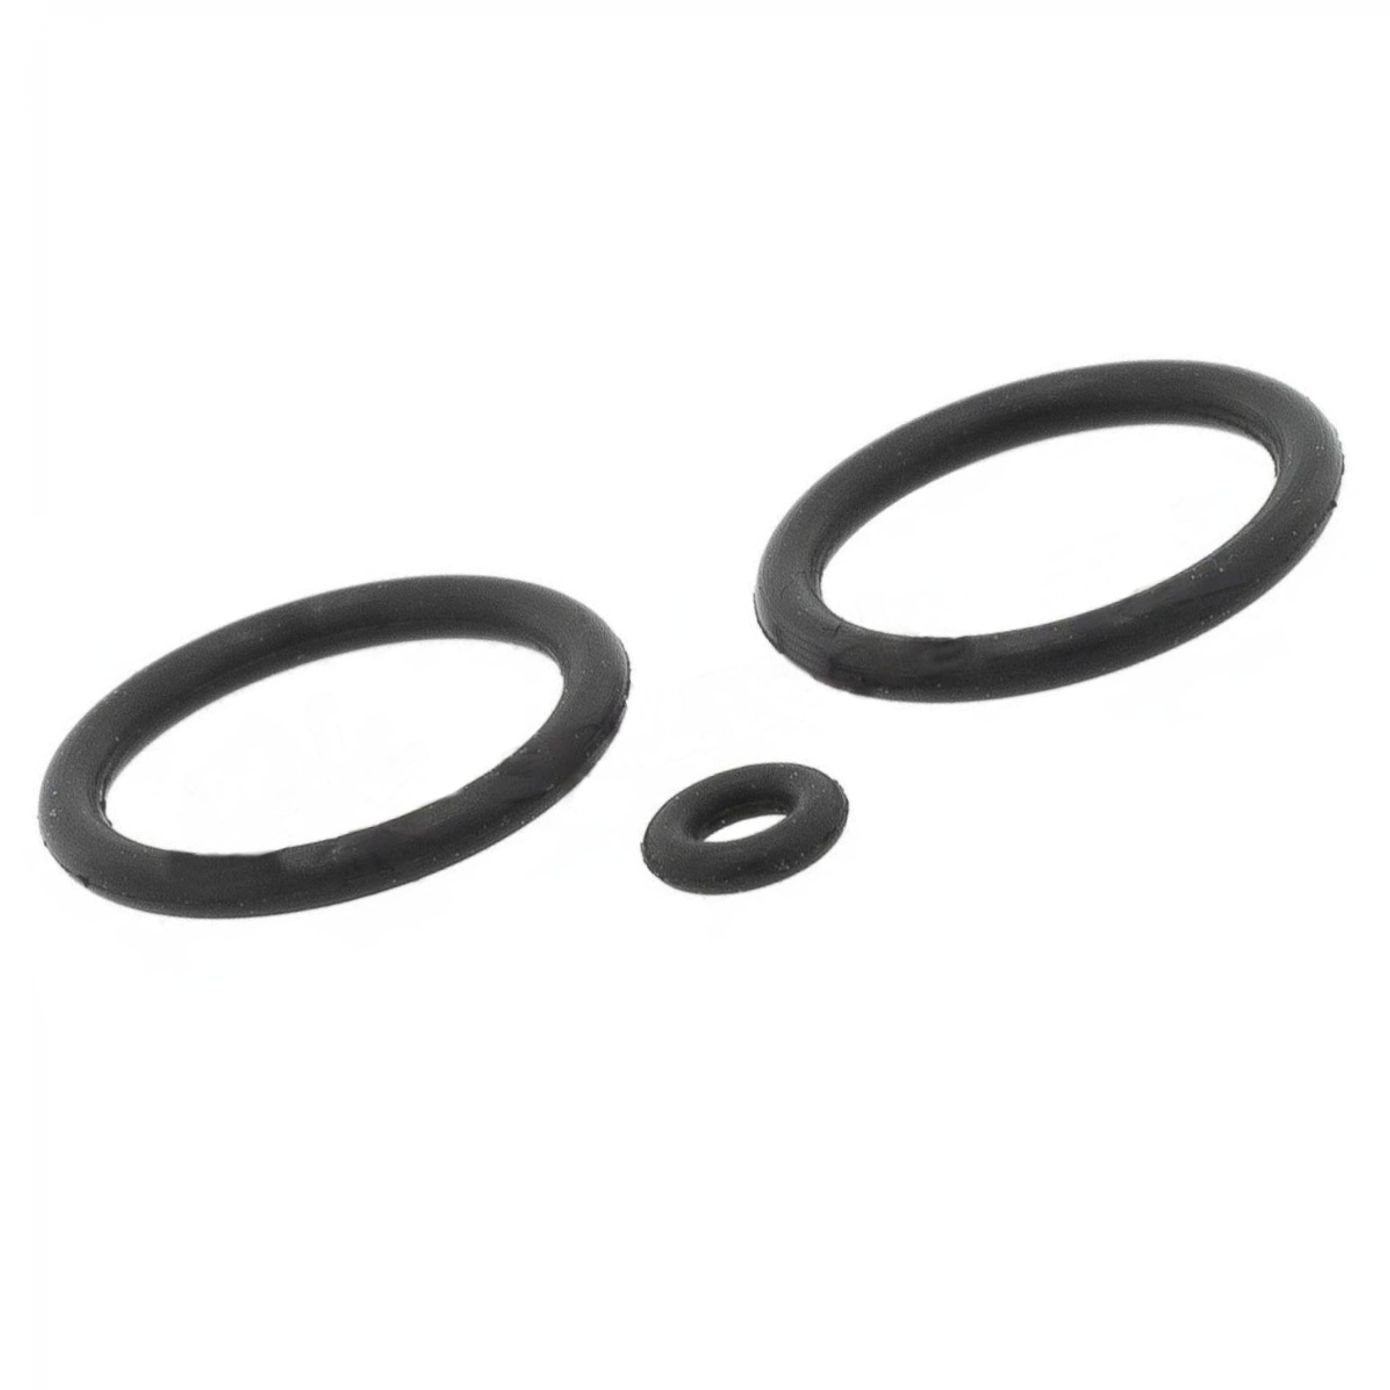 O-ring for BIEN AIR Unifix Quick Coupler - 3 pieces